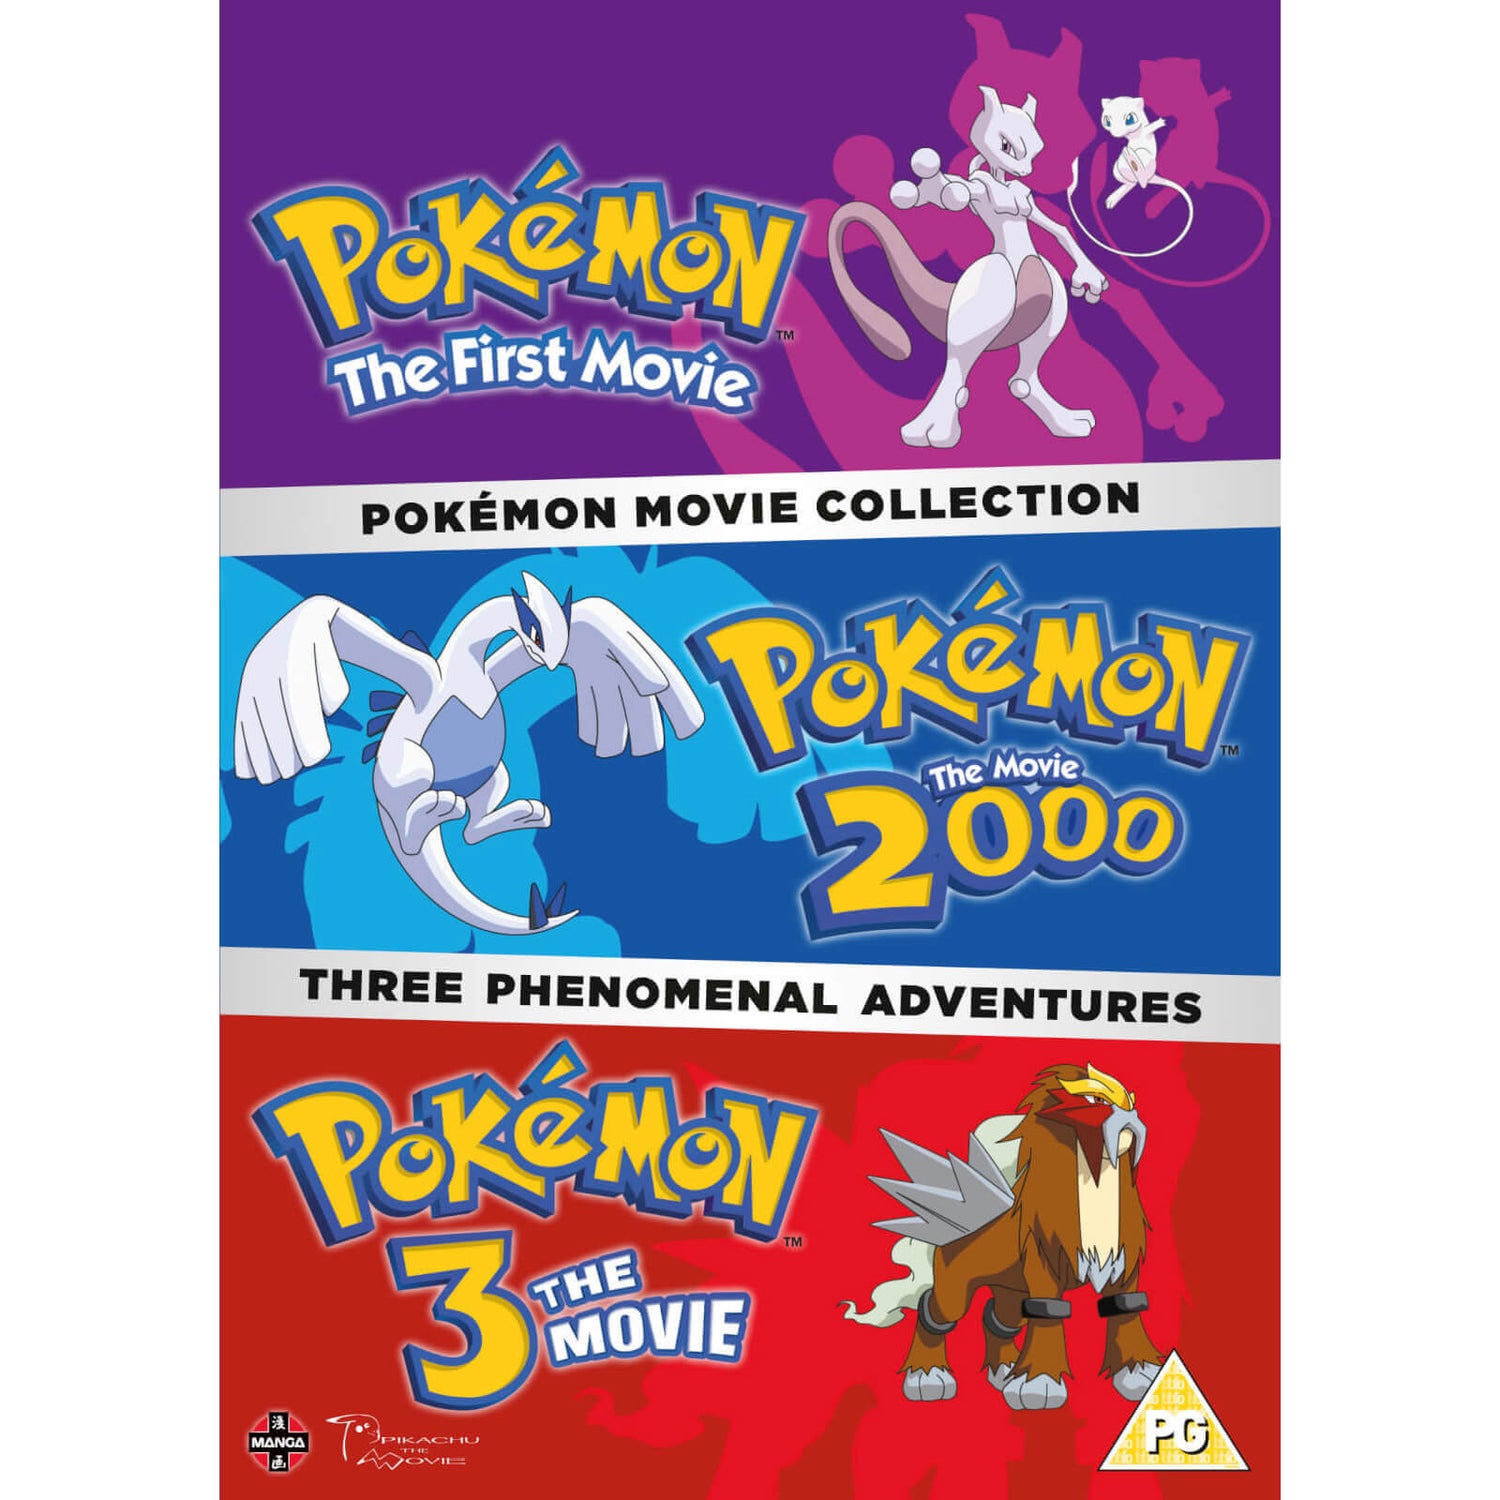 Pokémon Movie Collection (Pokémon The First Movie, Pokémon The Movie 2000, Pokémon 3 The Movie)